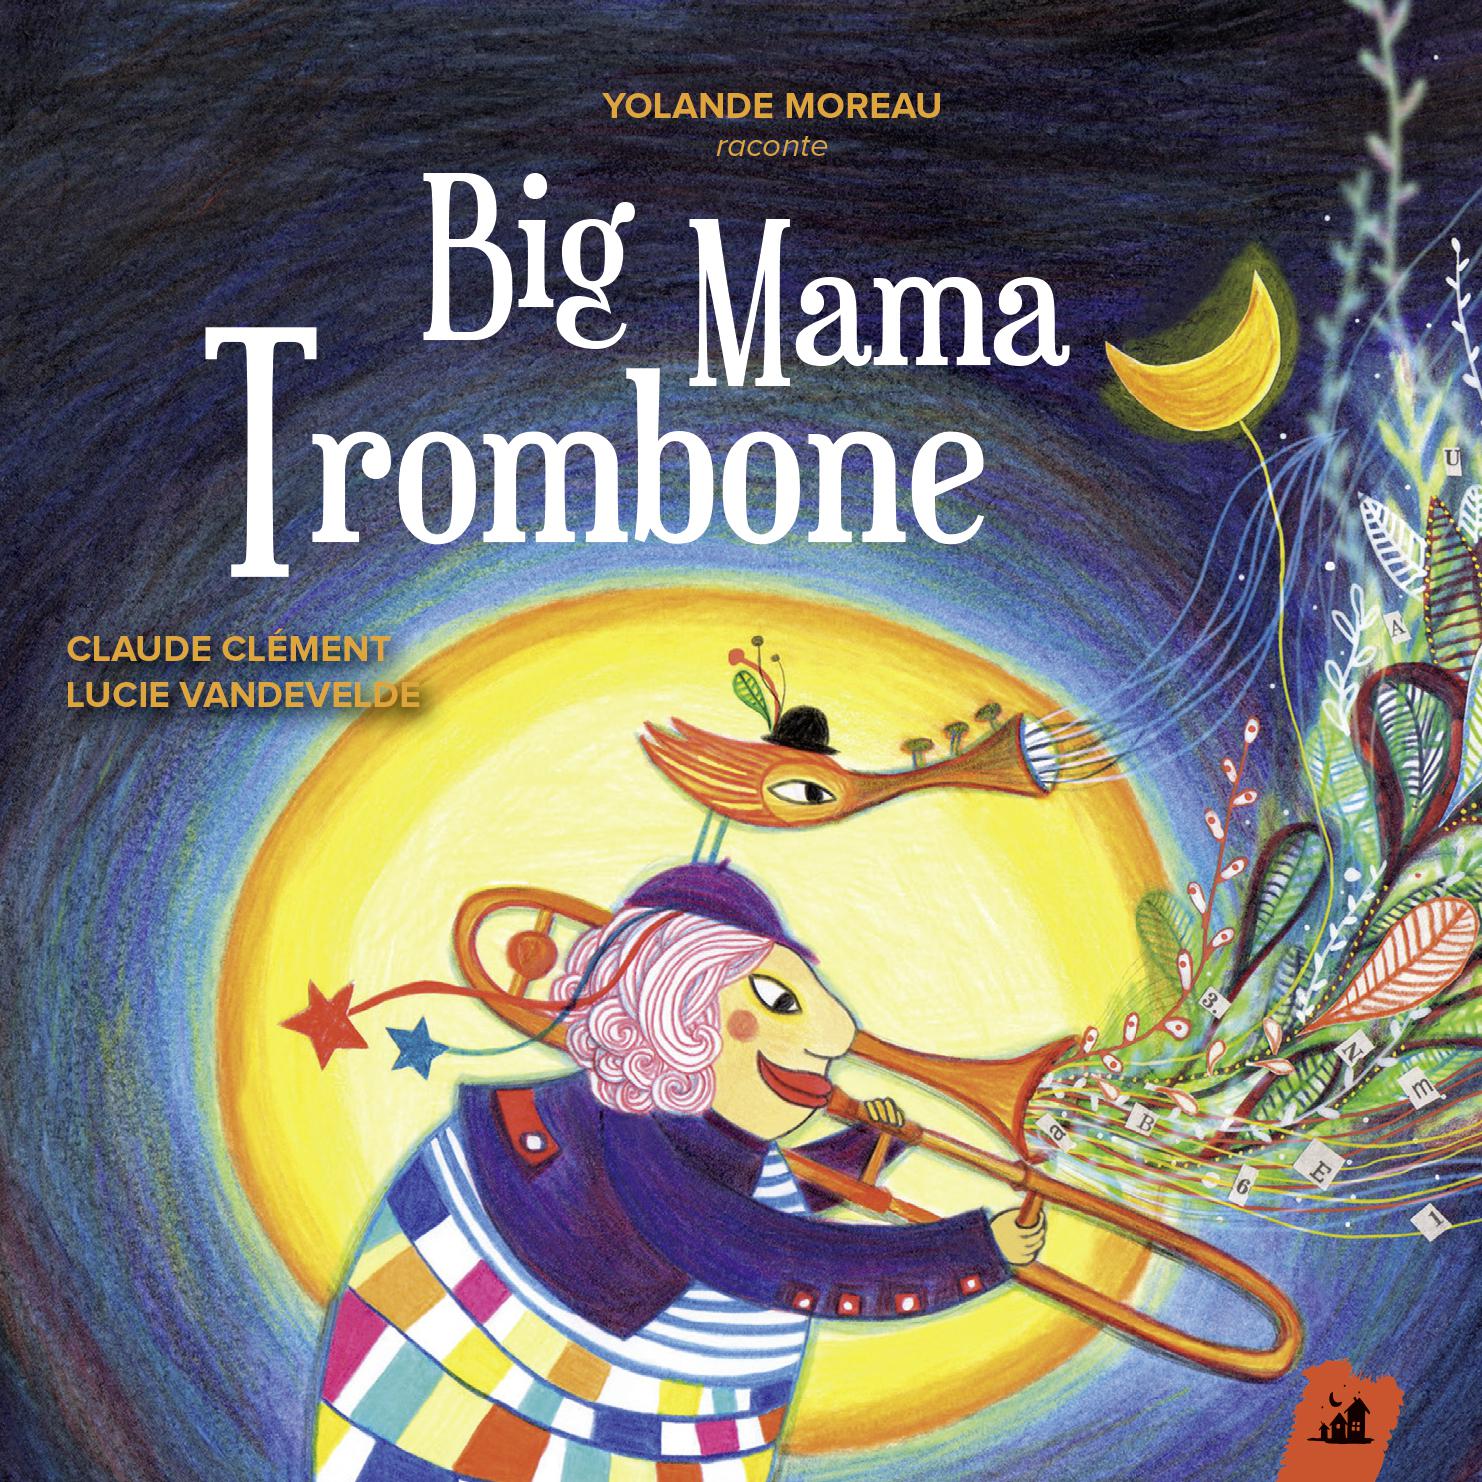 Big Mama trombone